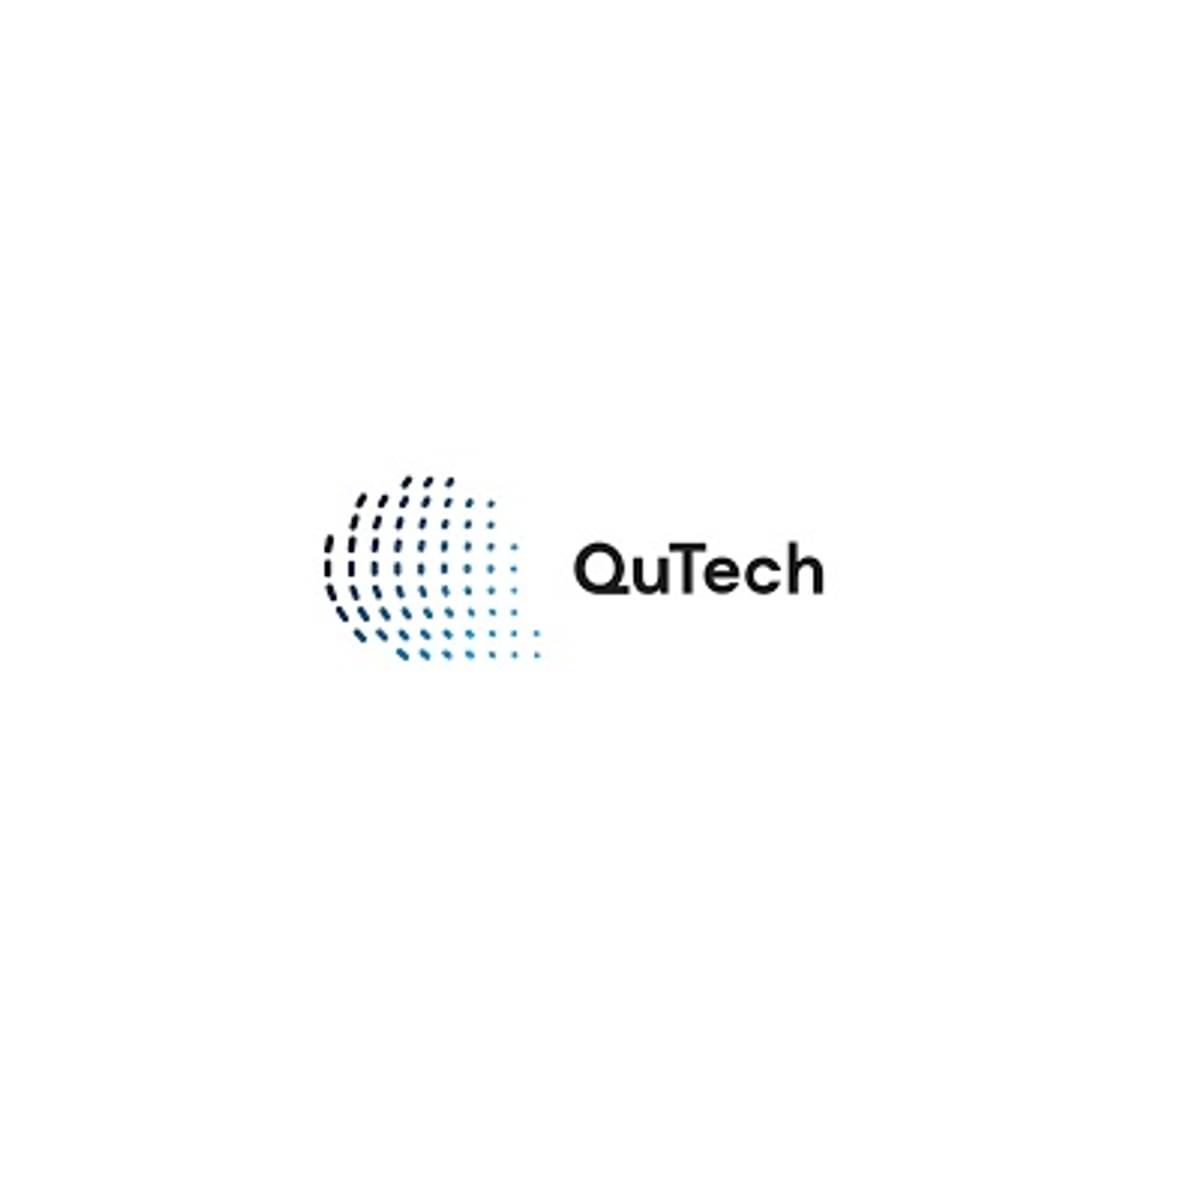 QuTech en Fujitsu werken nauwer samen rond Quantum Computing image